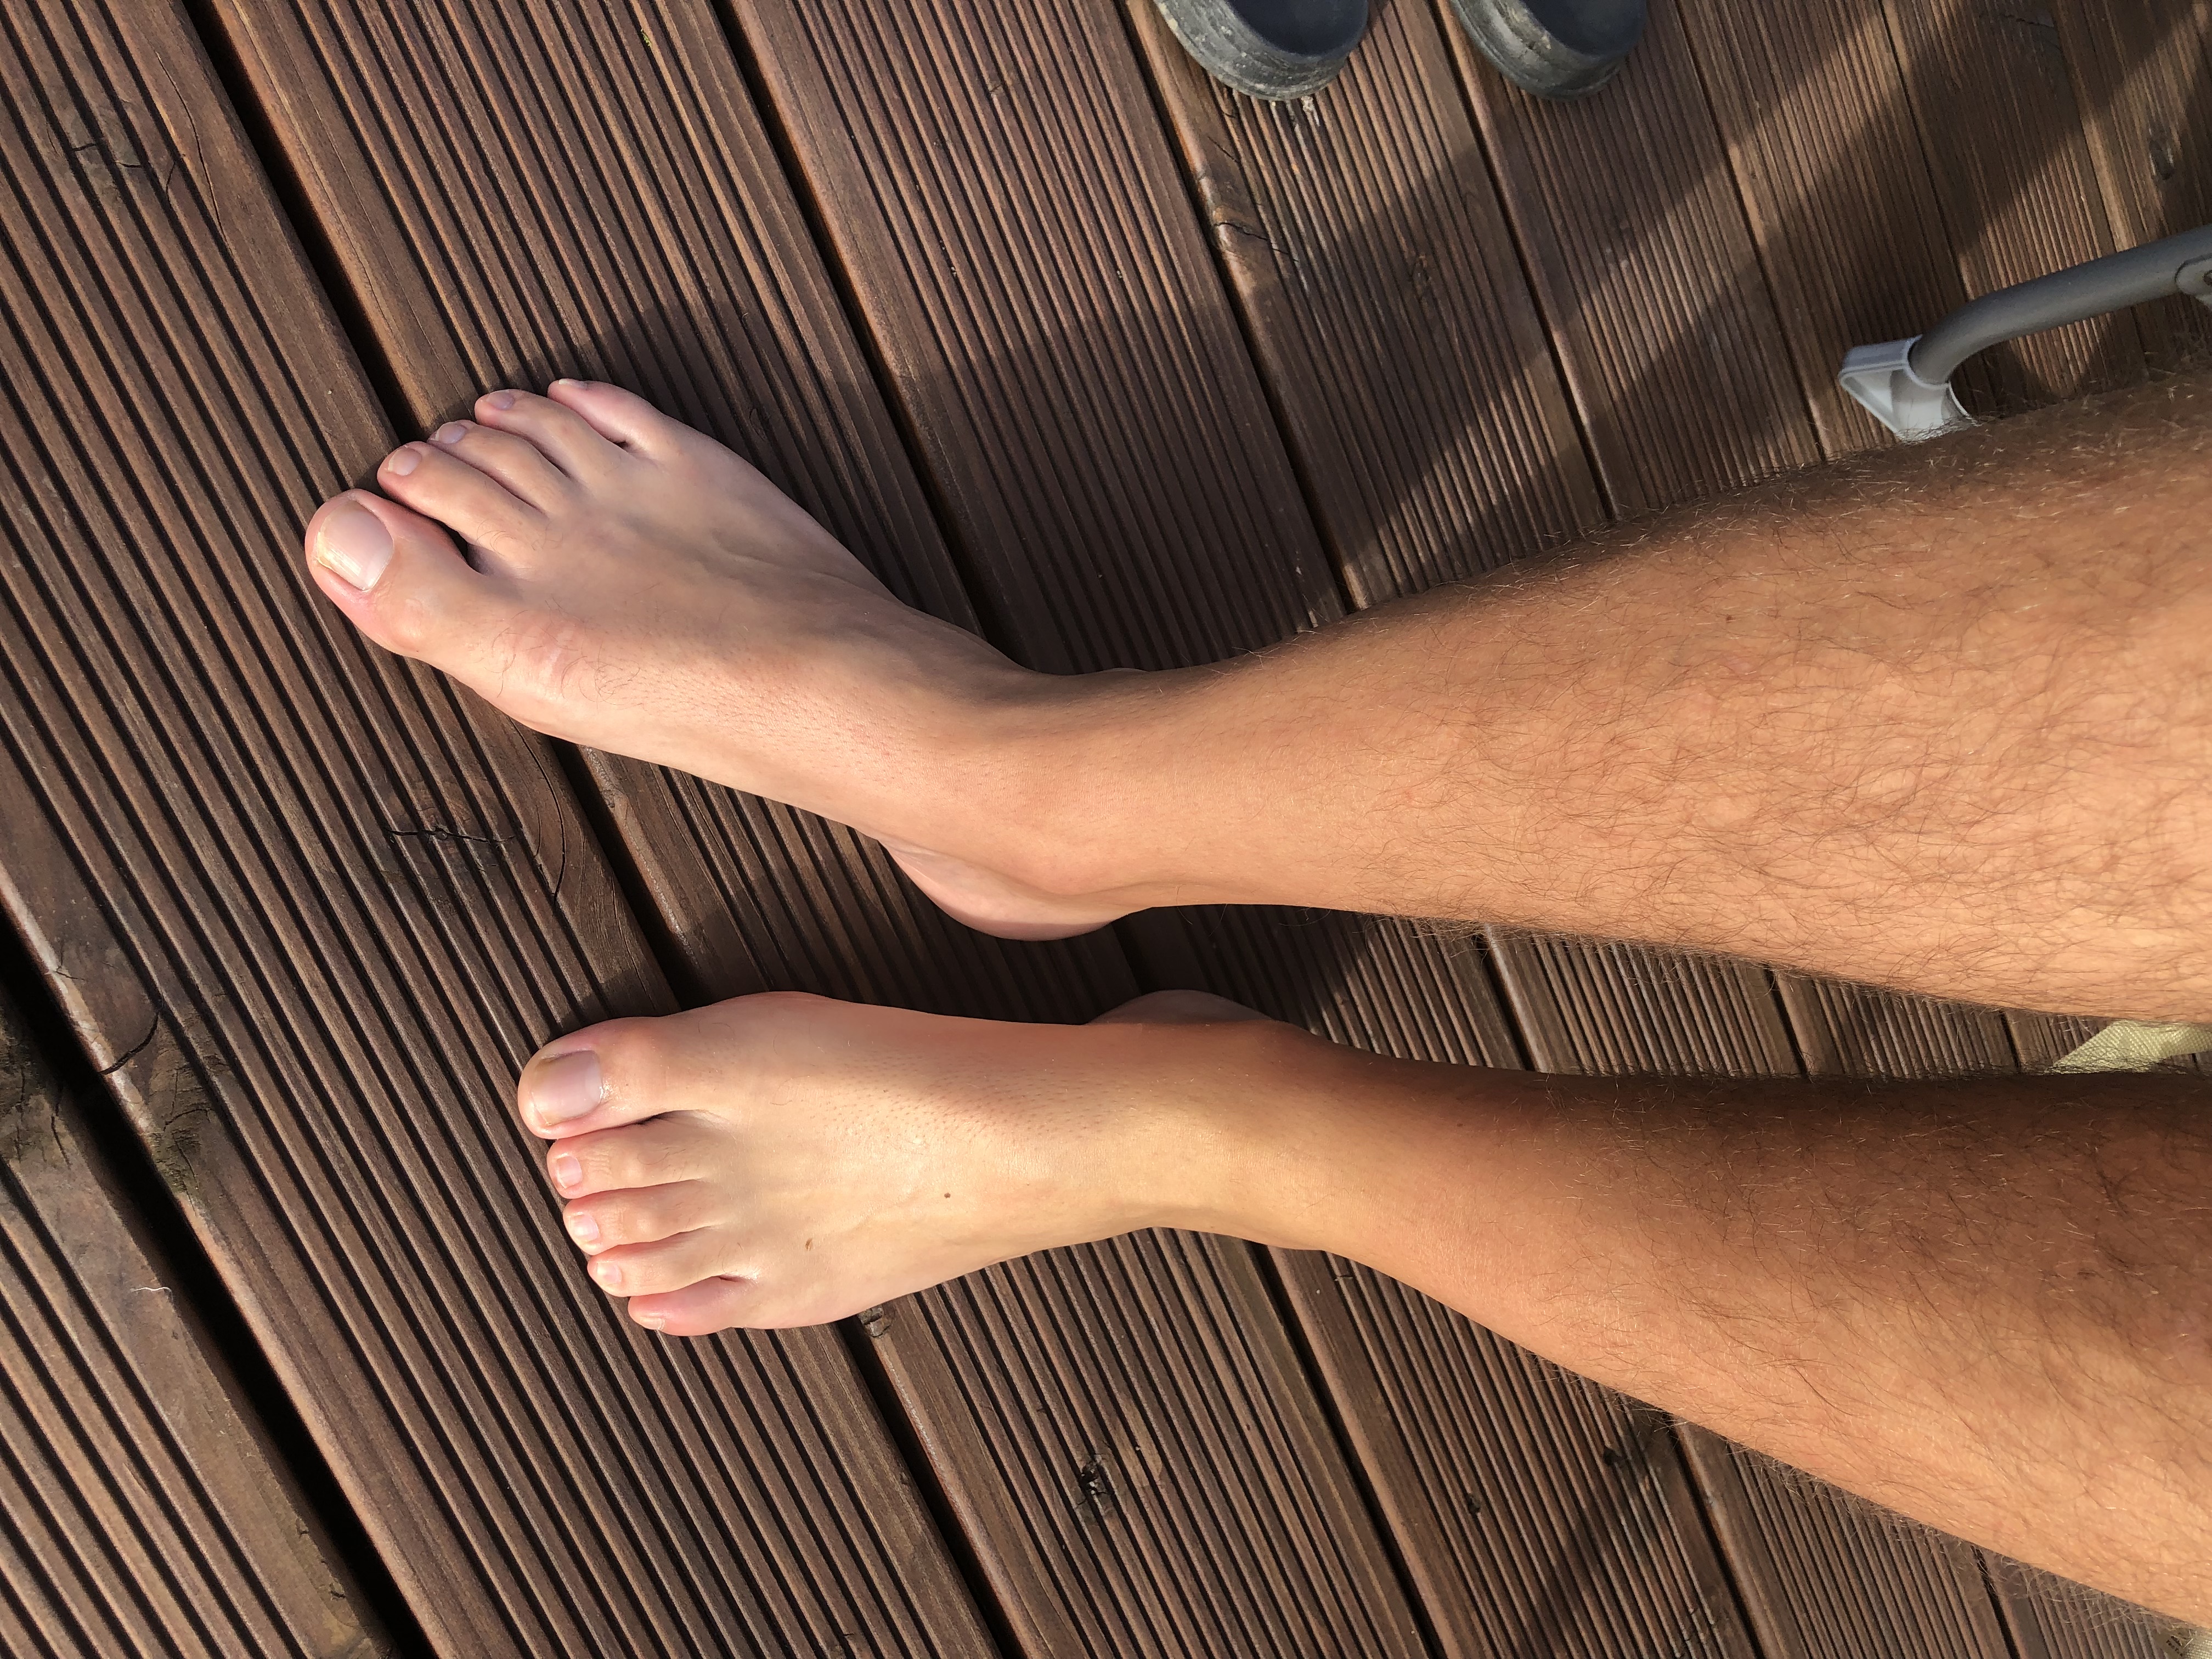 Cumming on my feet in the garden